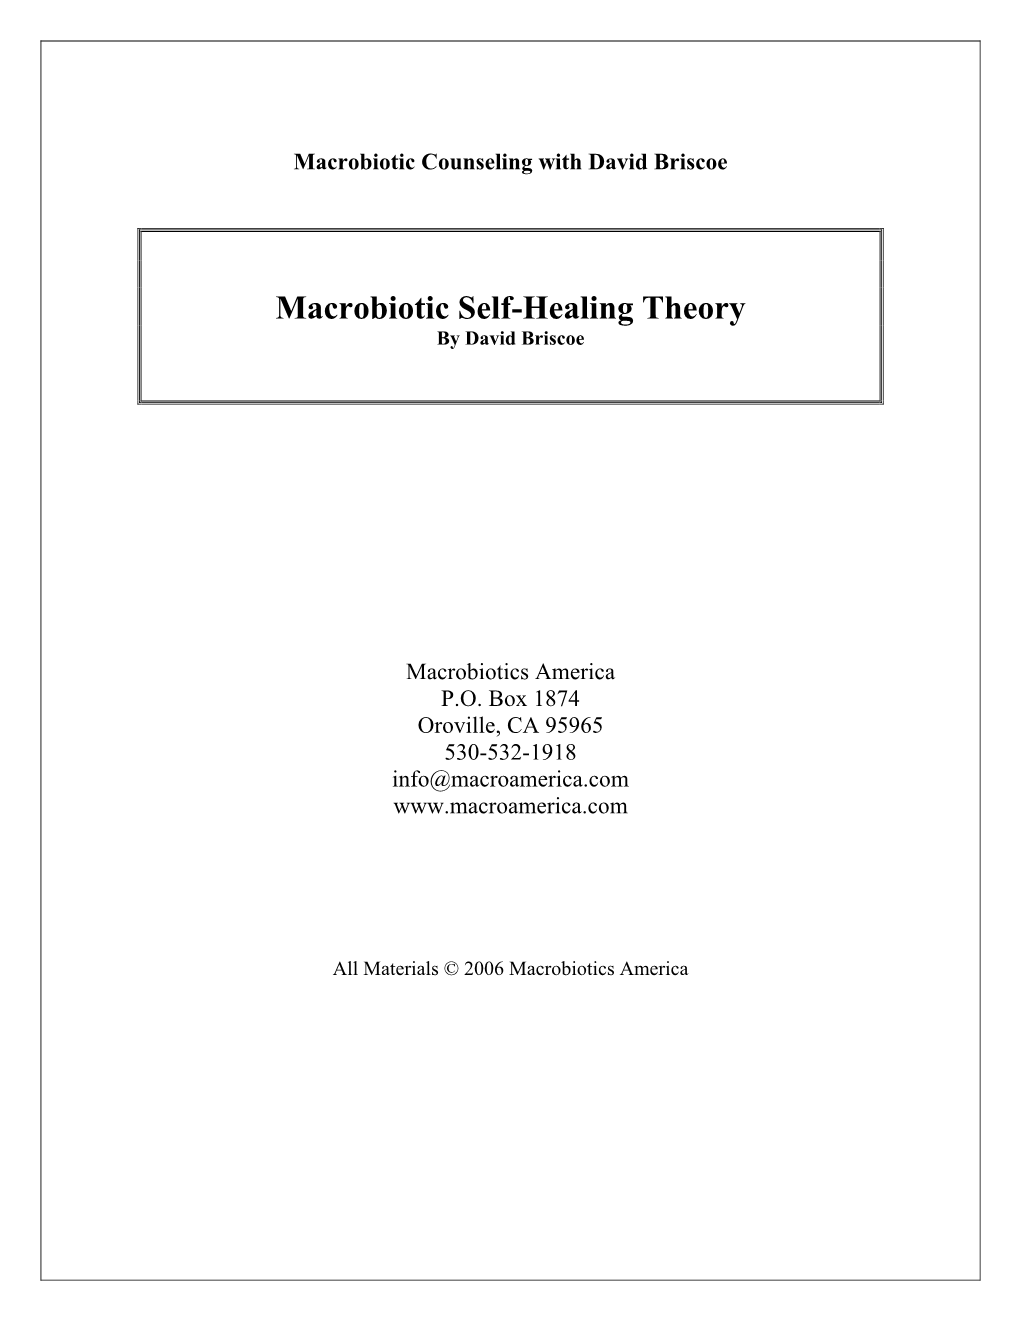 Macrobiotic Self-Healing Theory by David Briscoe